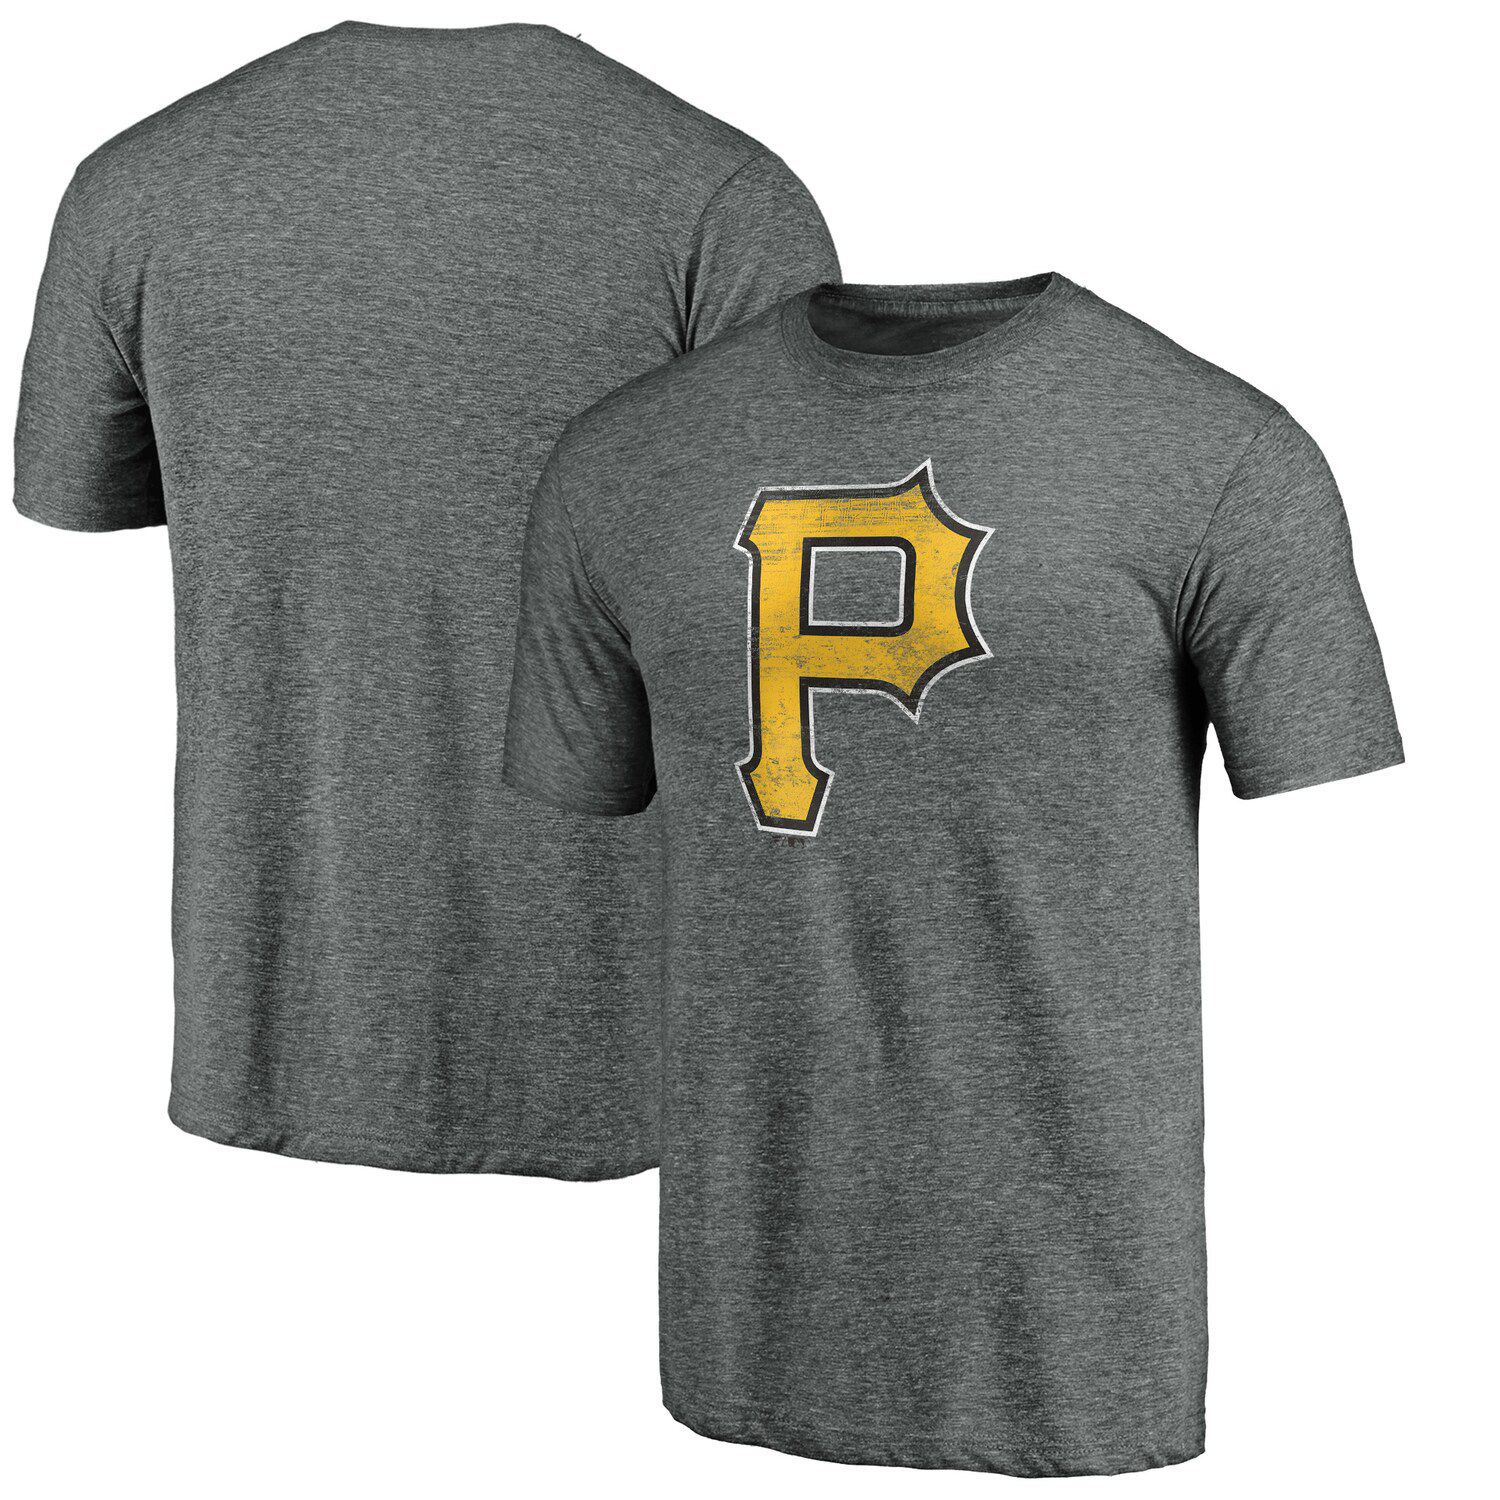 Pittsburgh Pirates gear